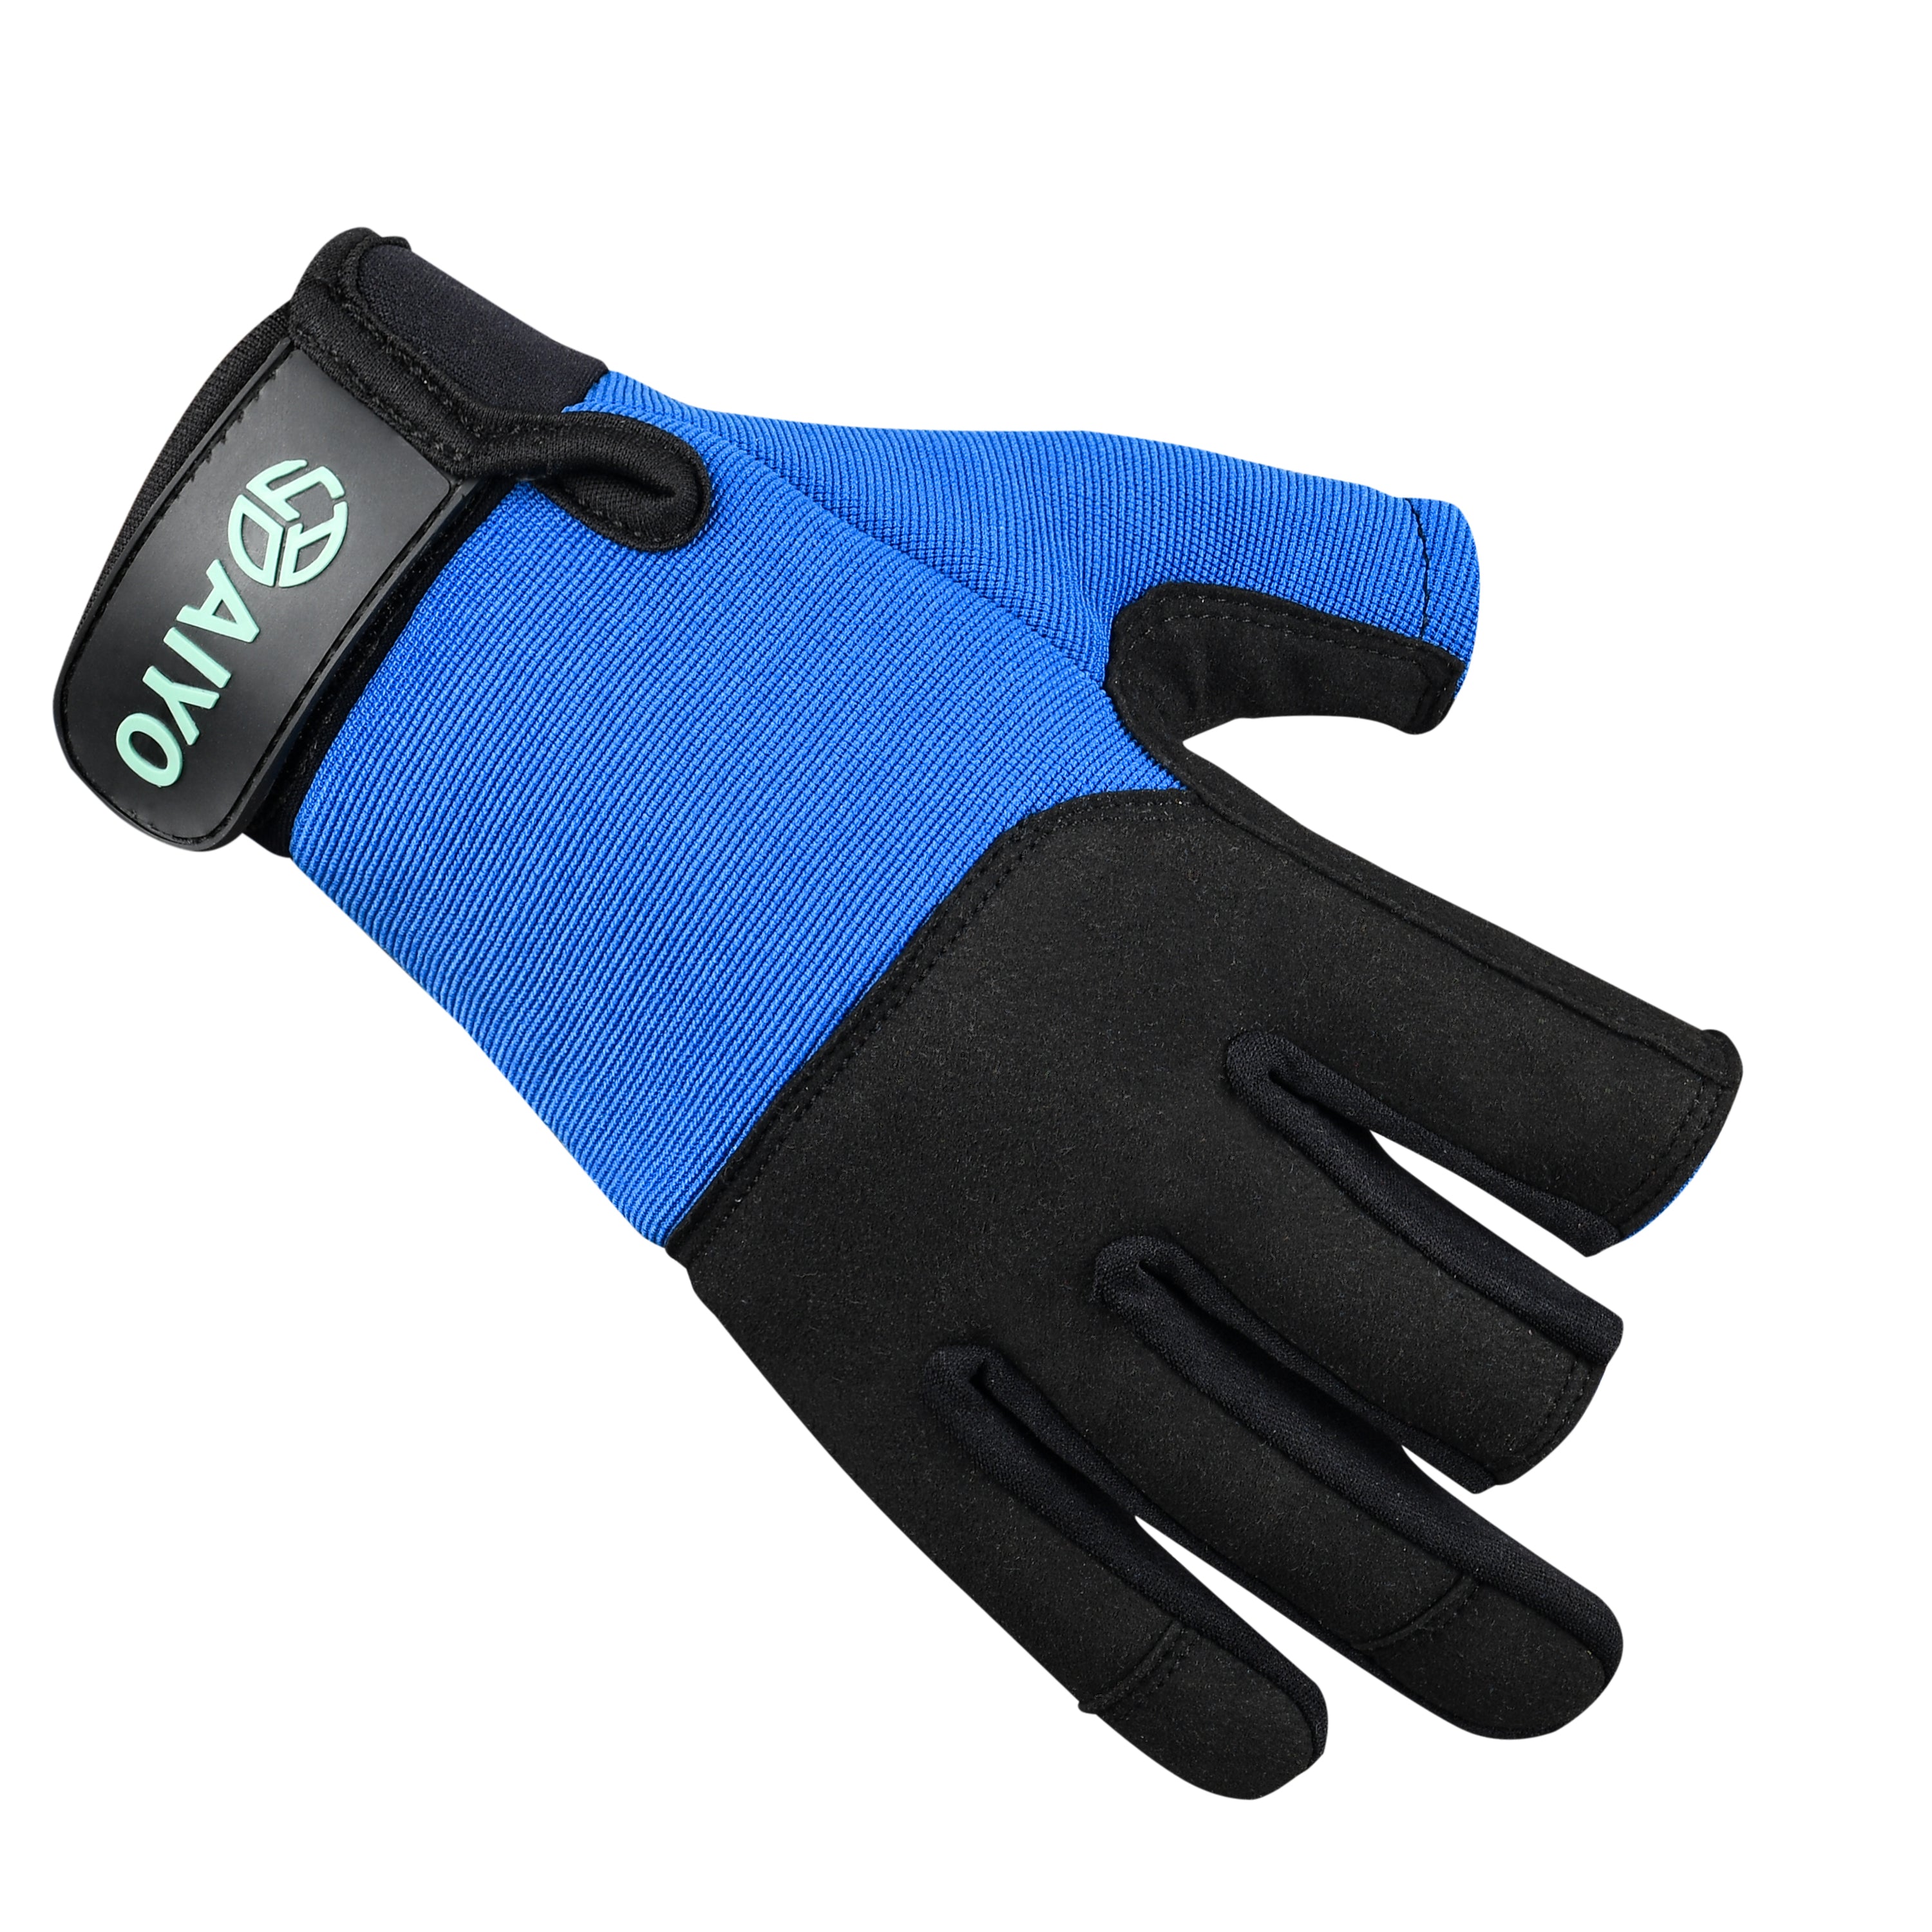 AIYO - Octavia 3 Fingerless Safety Gloves - Multi - Size M